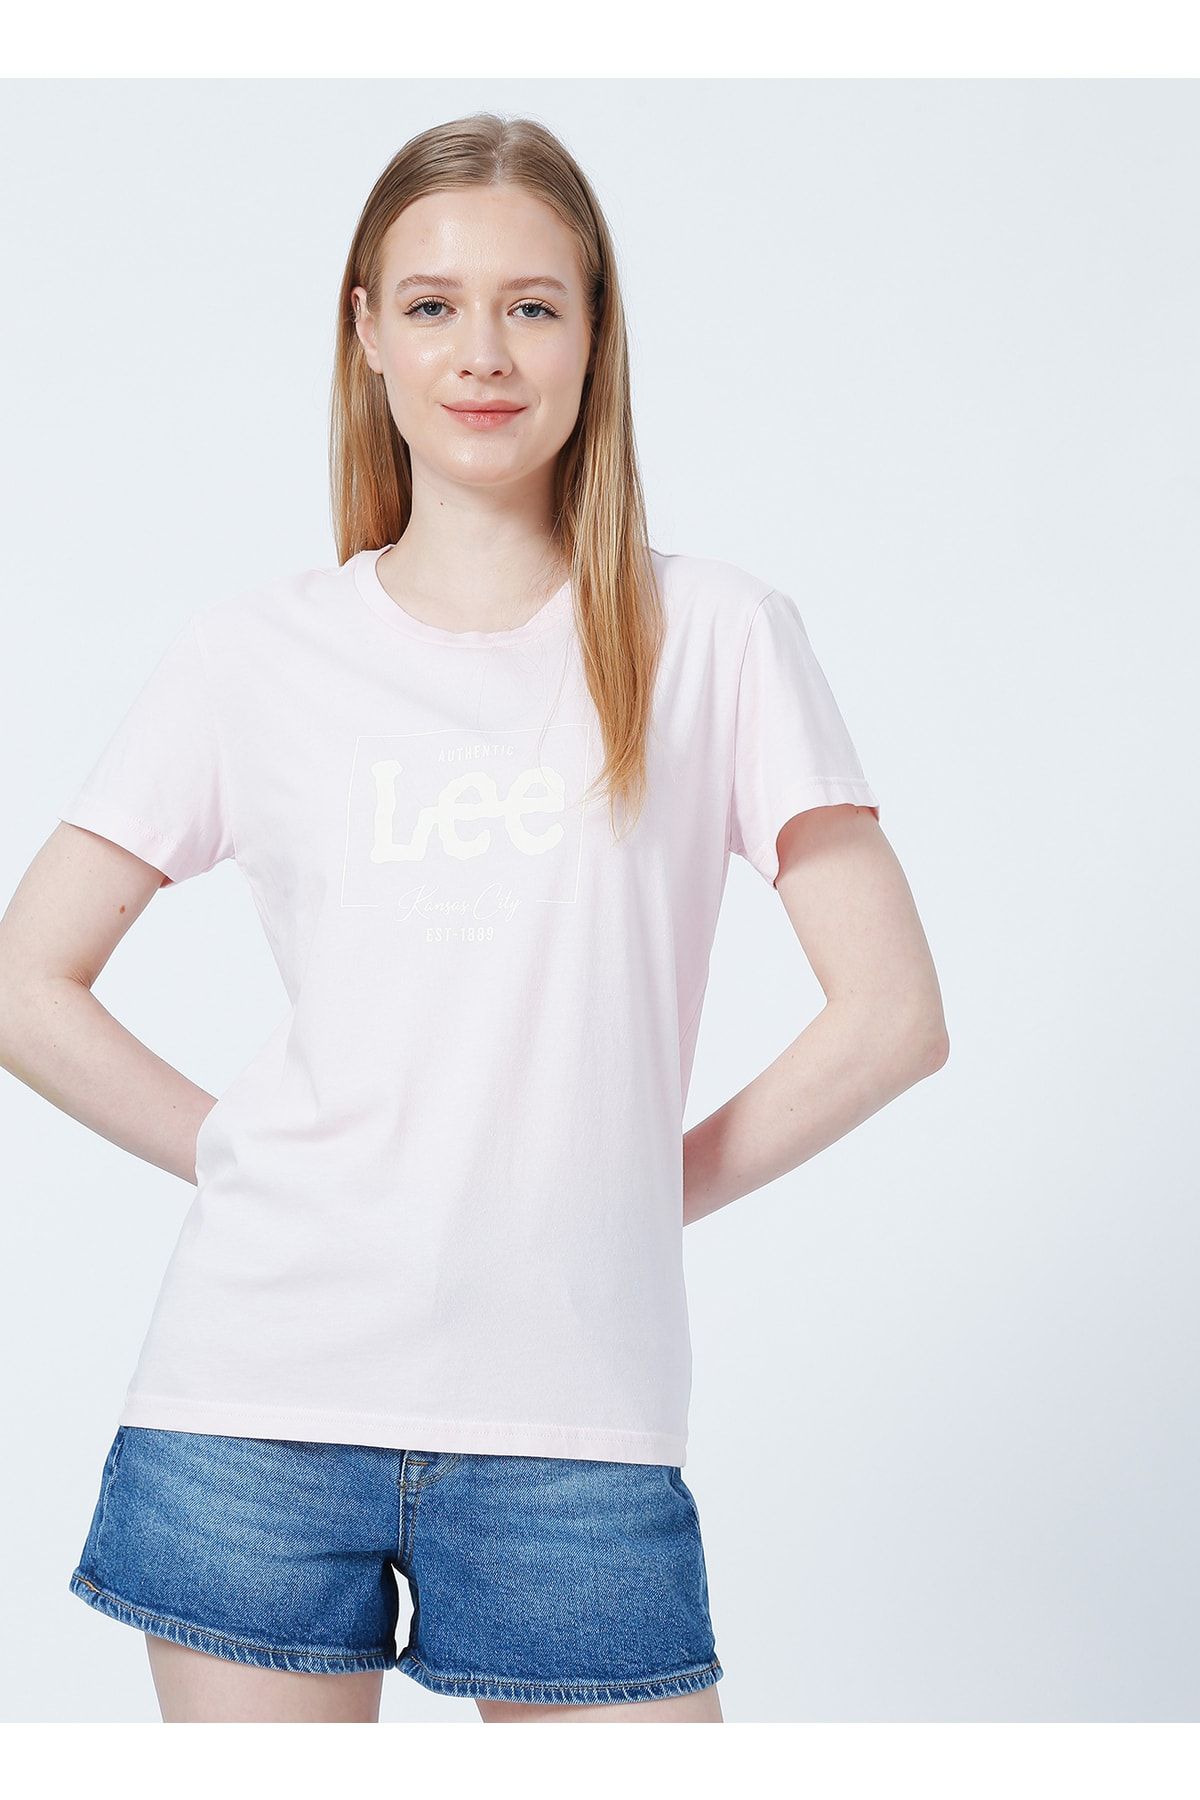 Lee T-shirt, S, Lila